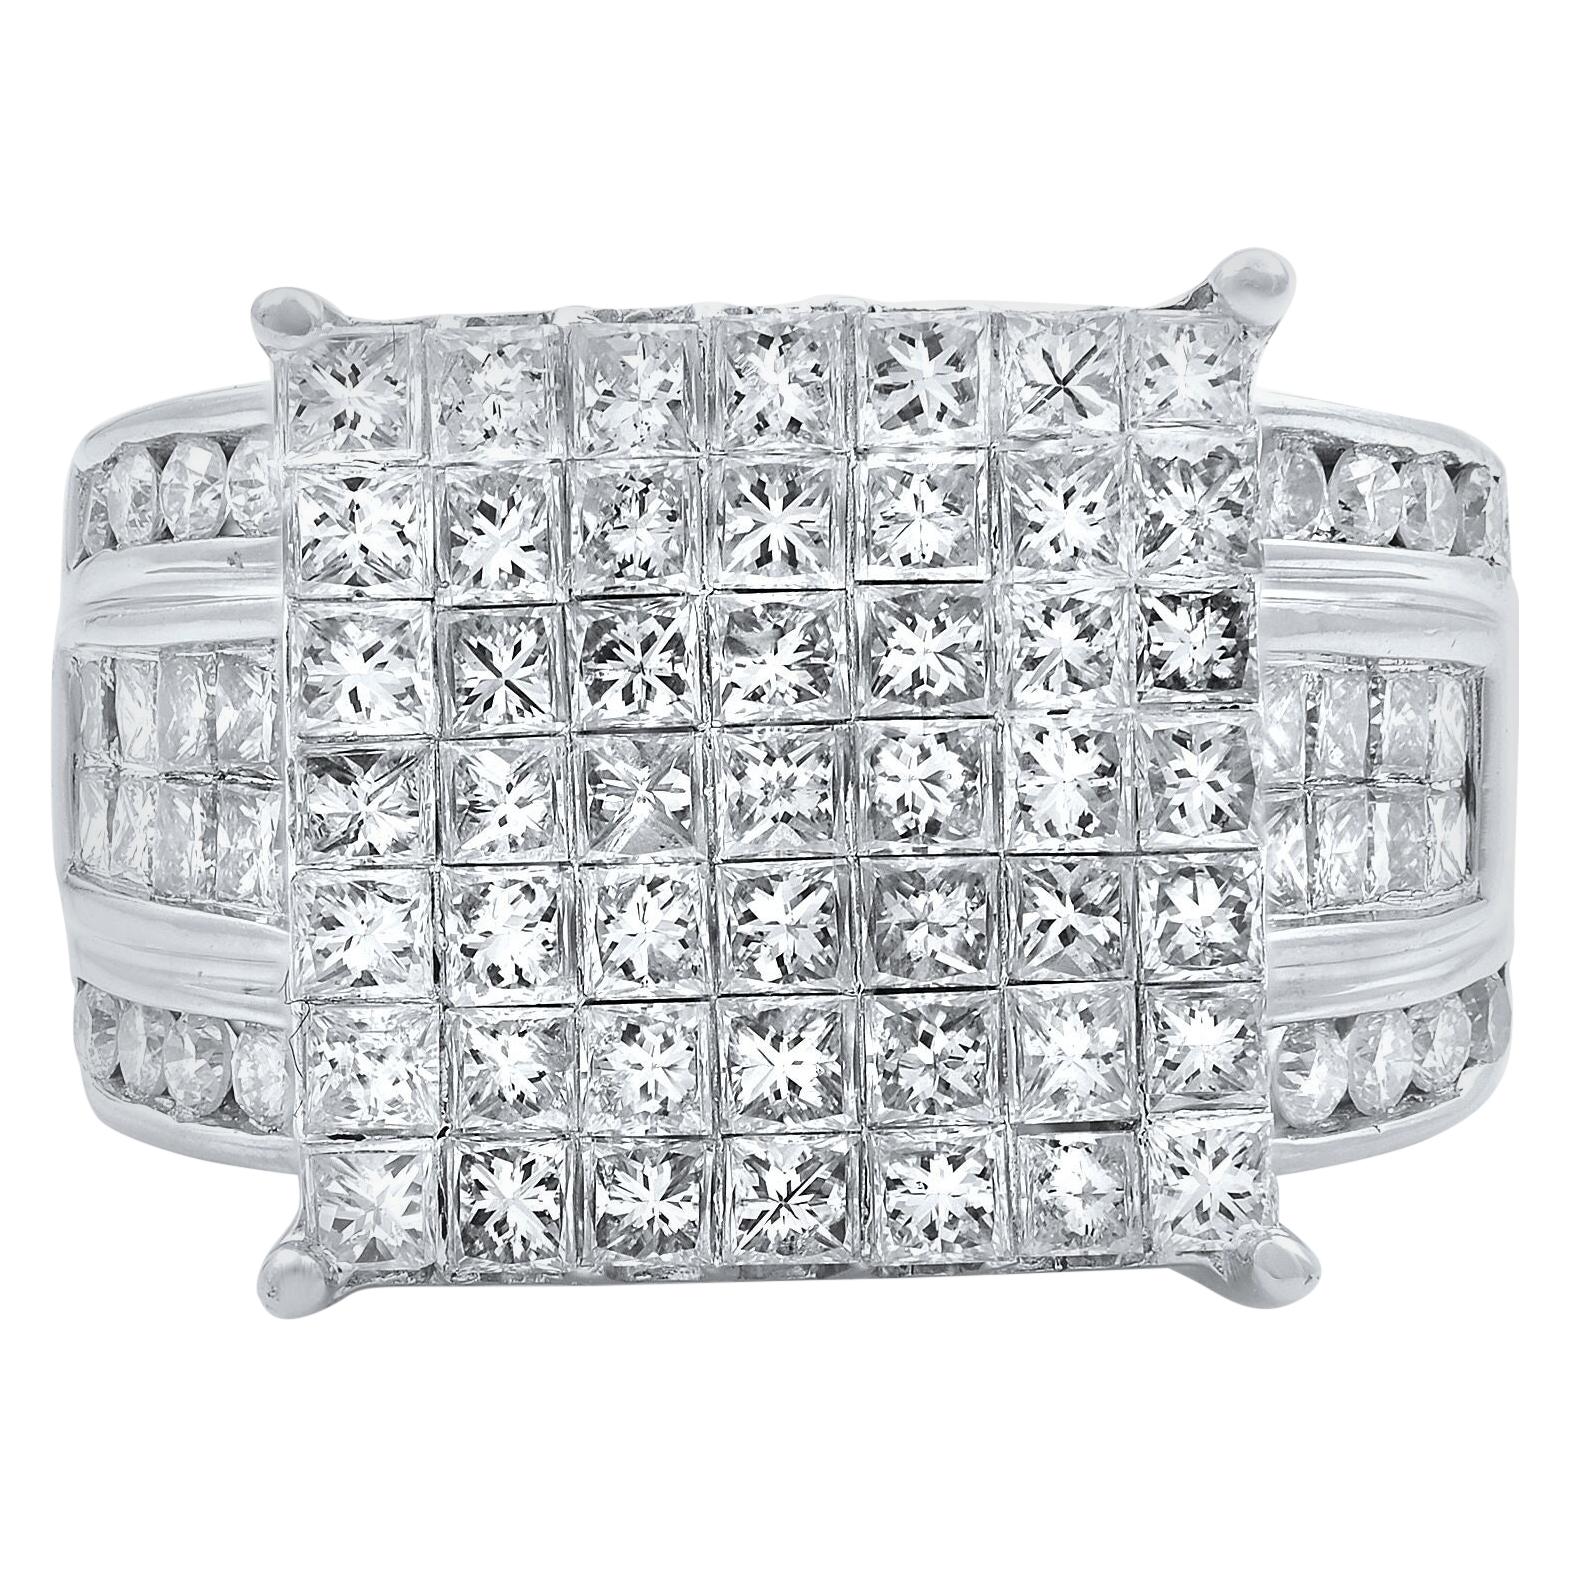 Rachel Koen Wide Diamond Engagement Band Ring 14K White Gold 3.00 Cttw For Sale